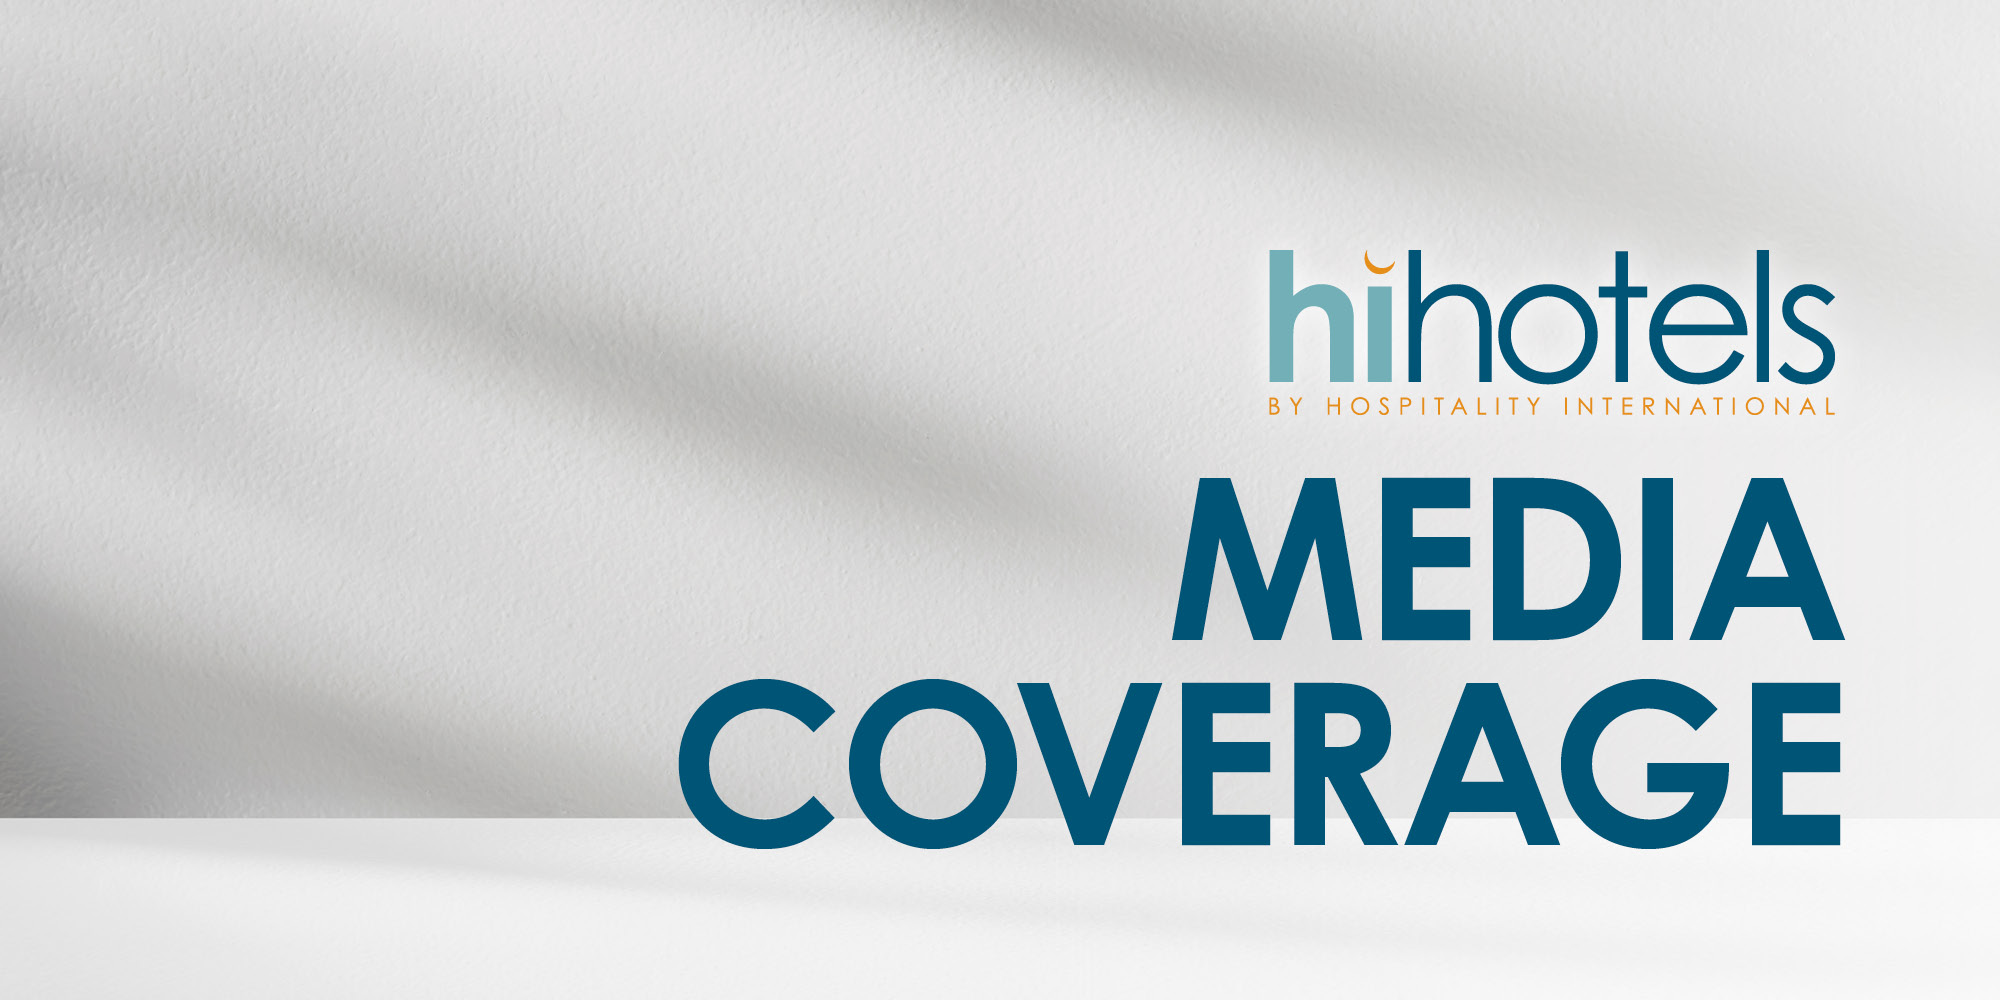 hihotels-hero-image-media-coverage